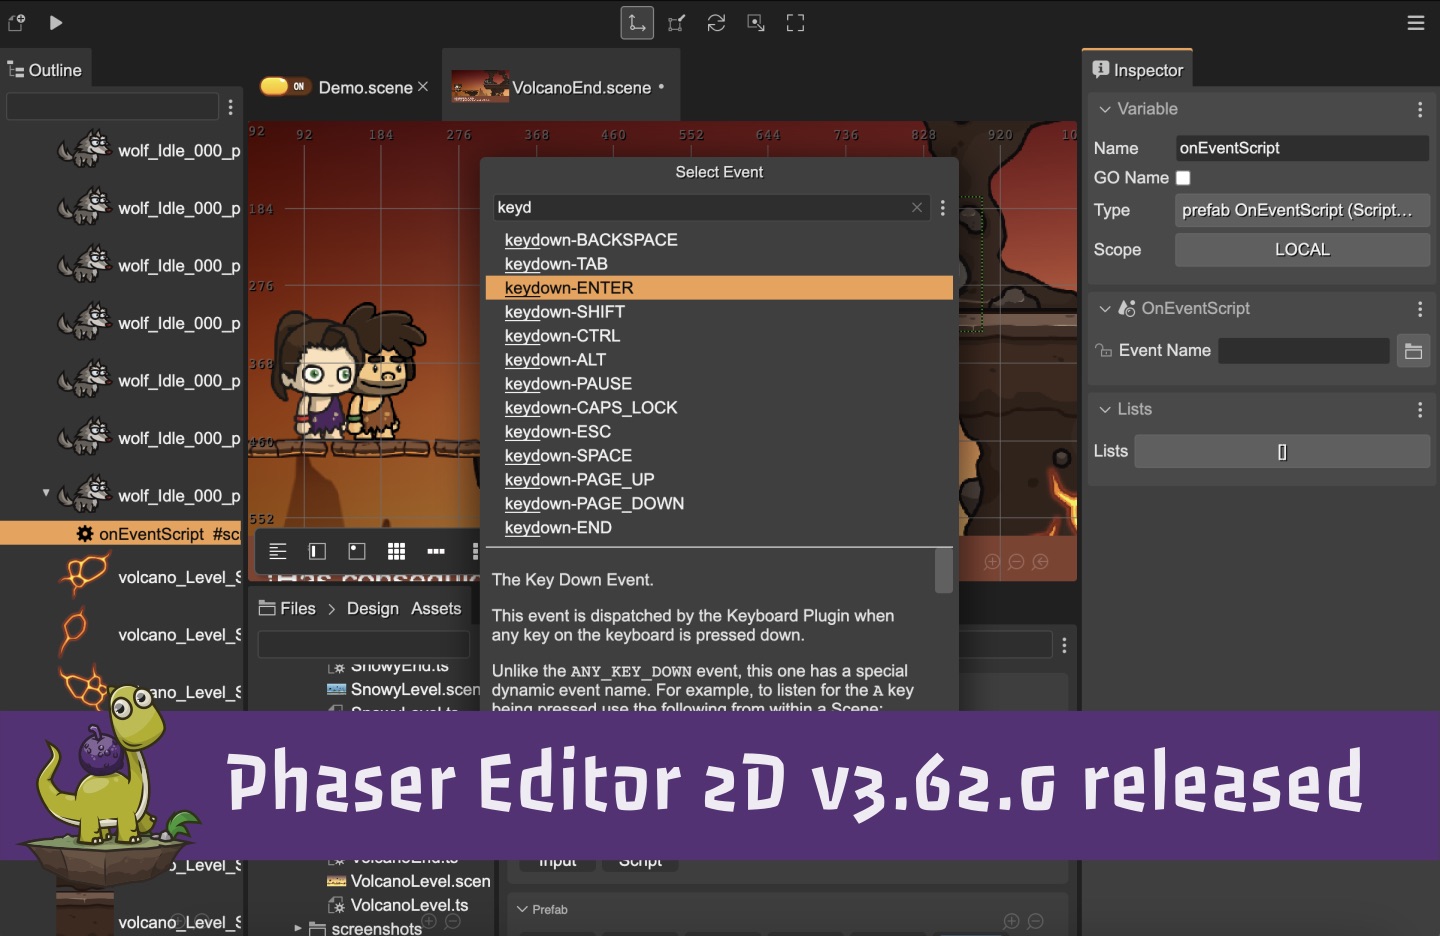 Phaser Editor 2D v3.62.0 released